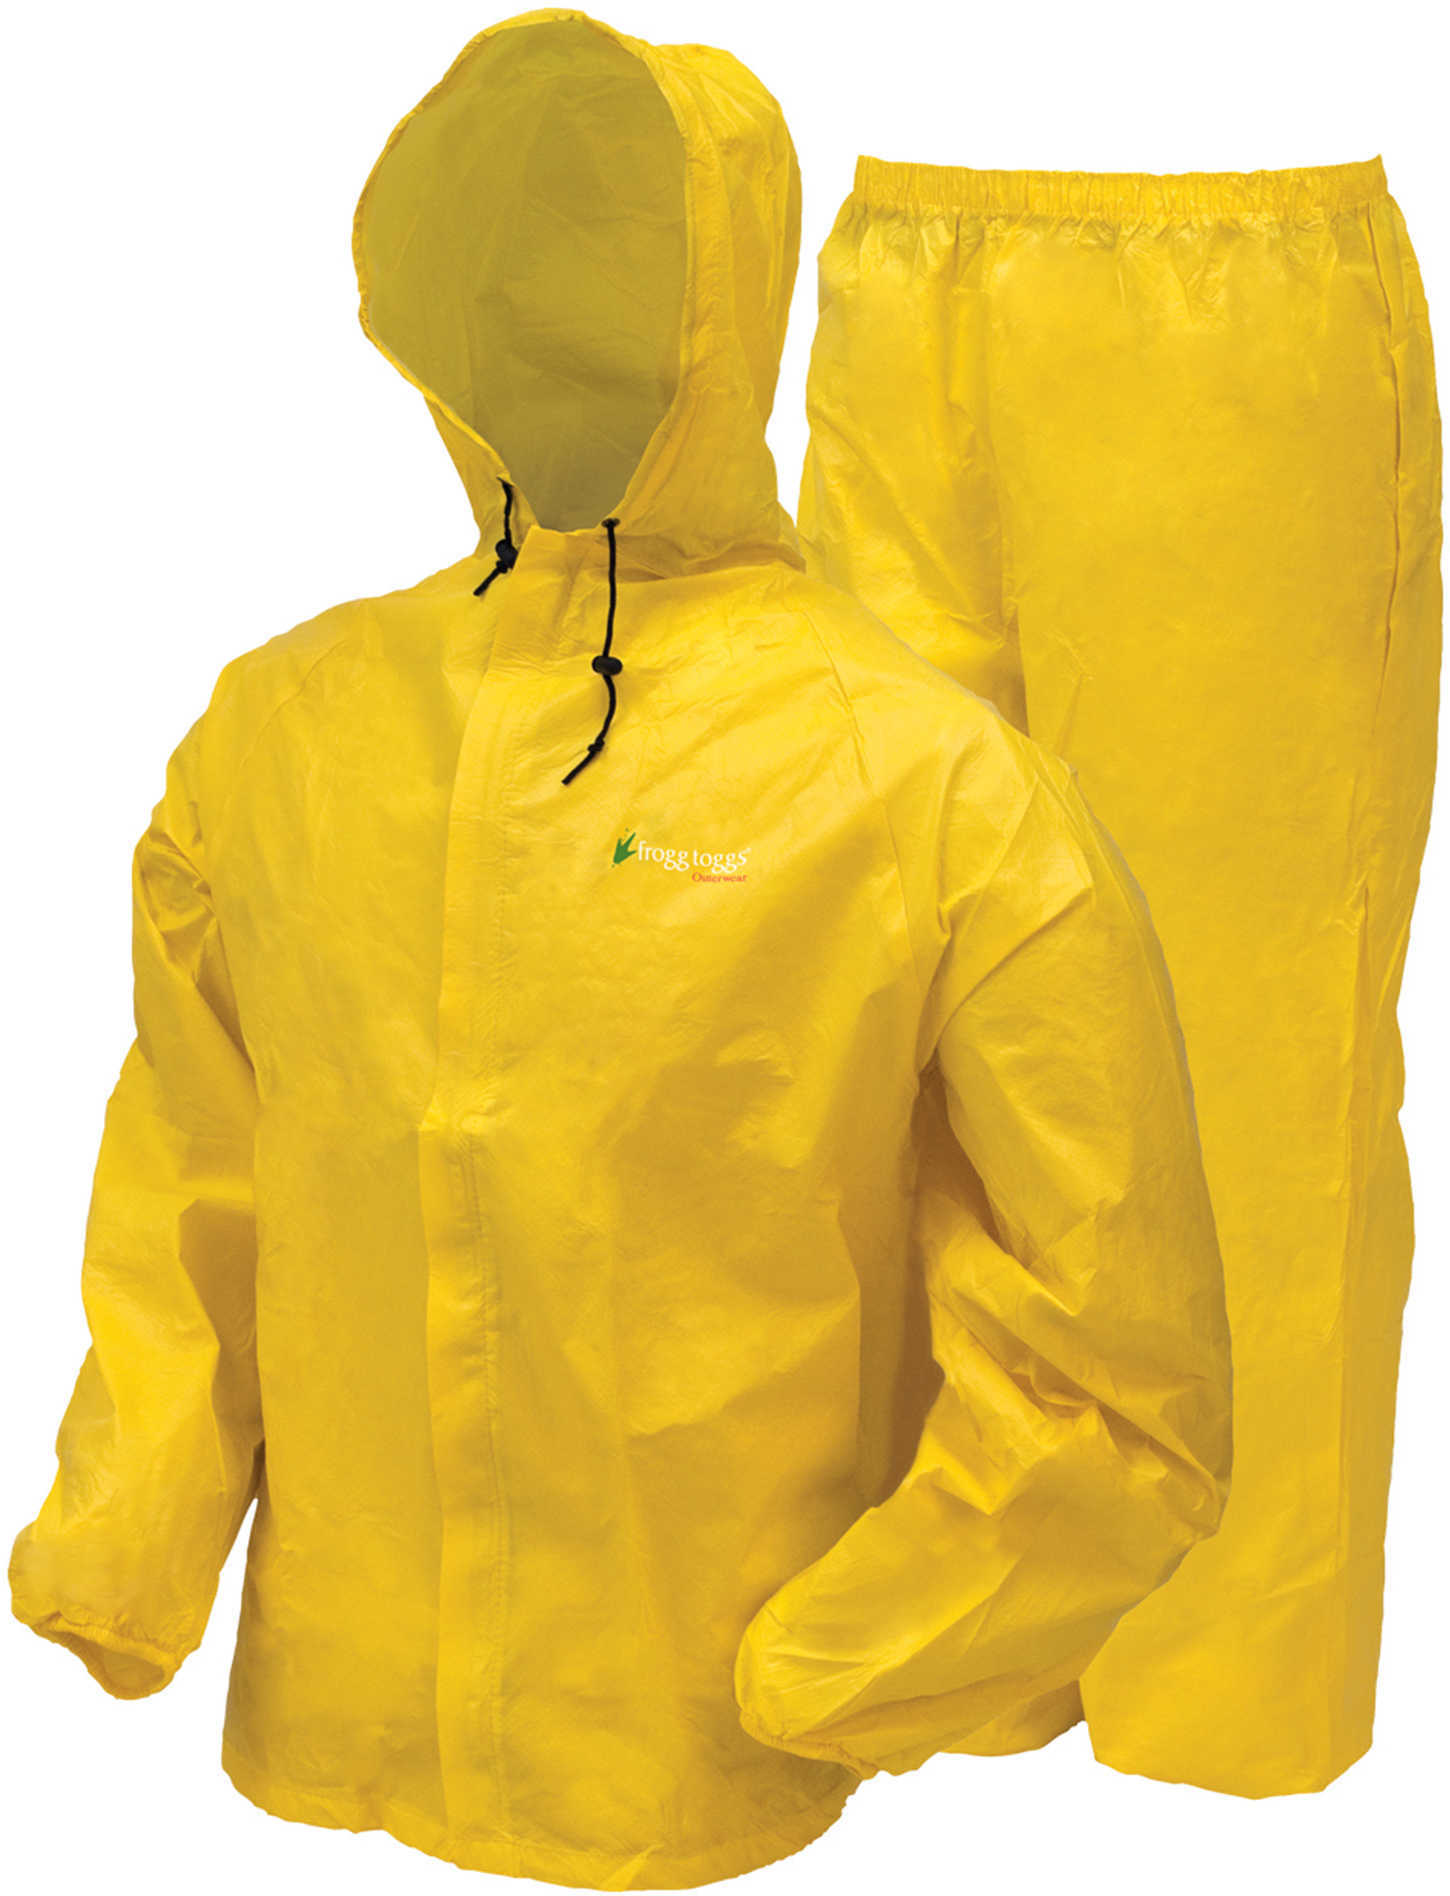 Frogg Toggs Ultra-Lite2 Rain Suit w/Stuff Sack Medium, Yellow UL12104-08MD